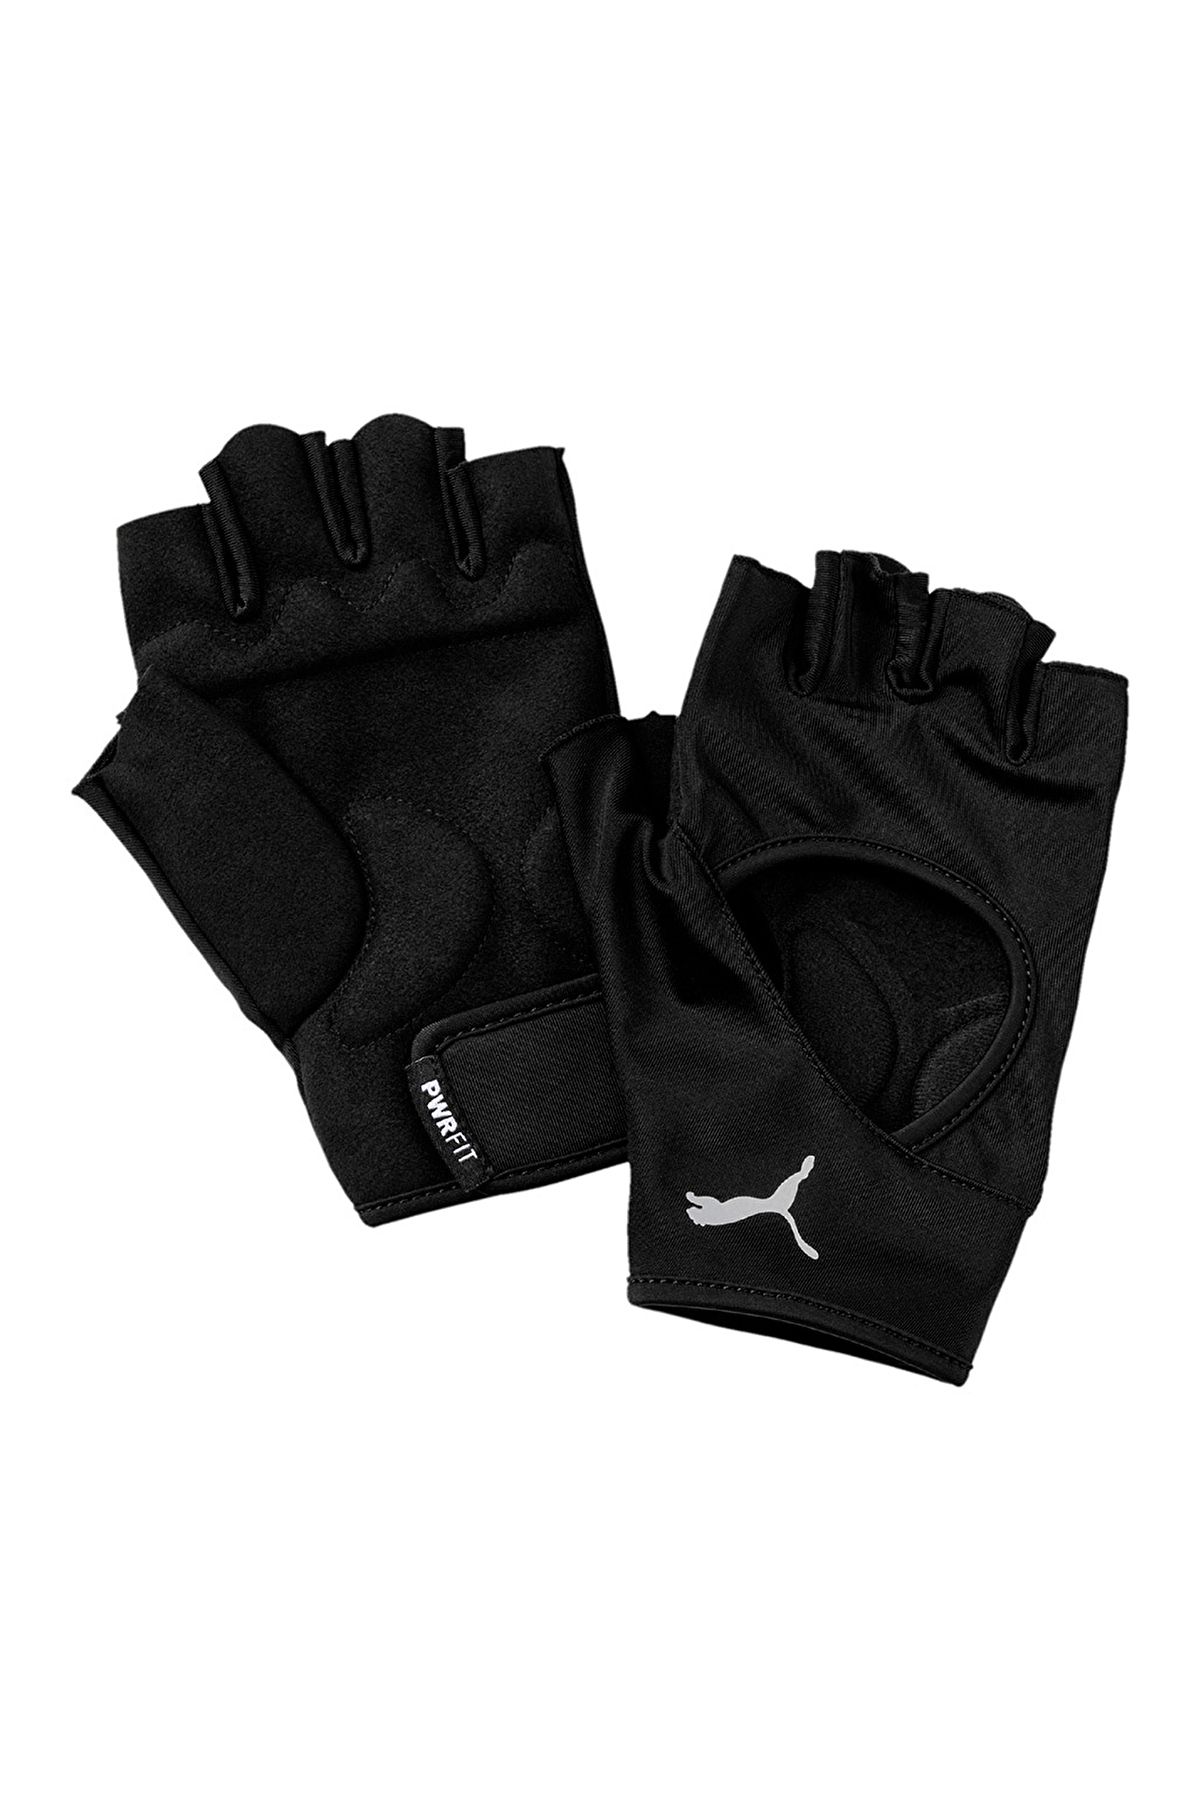 Puma TR Ess Gloves04146501